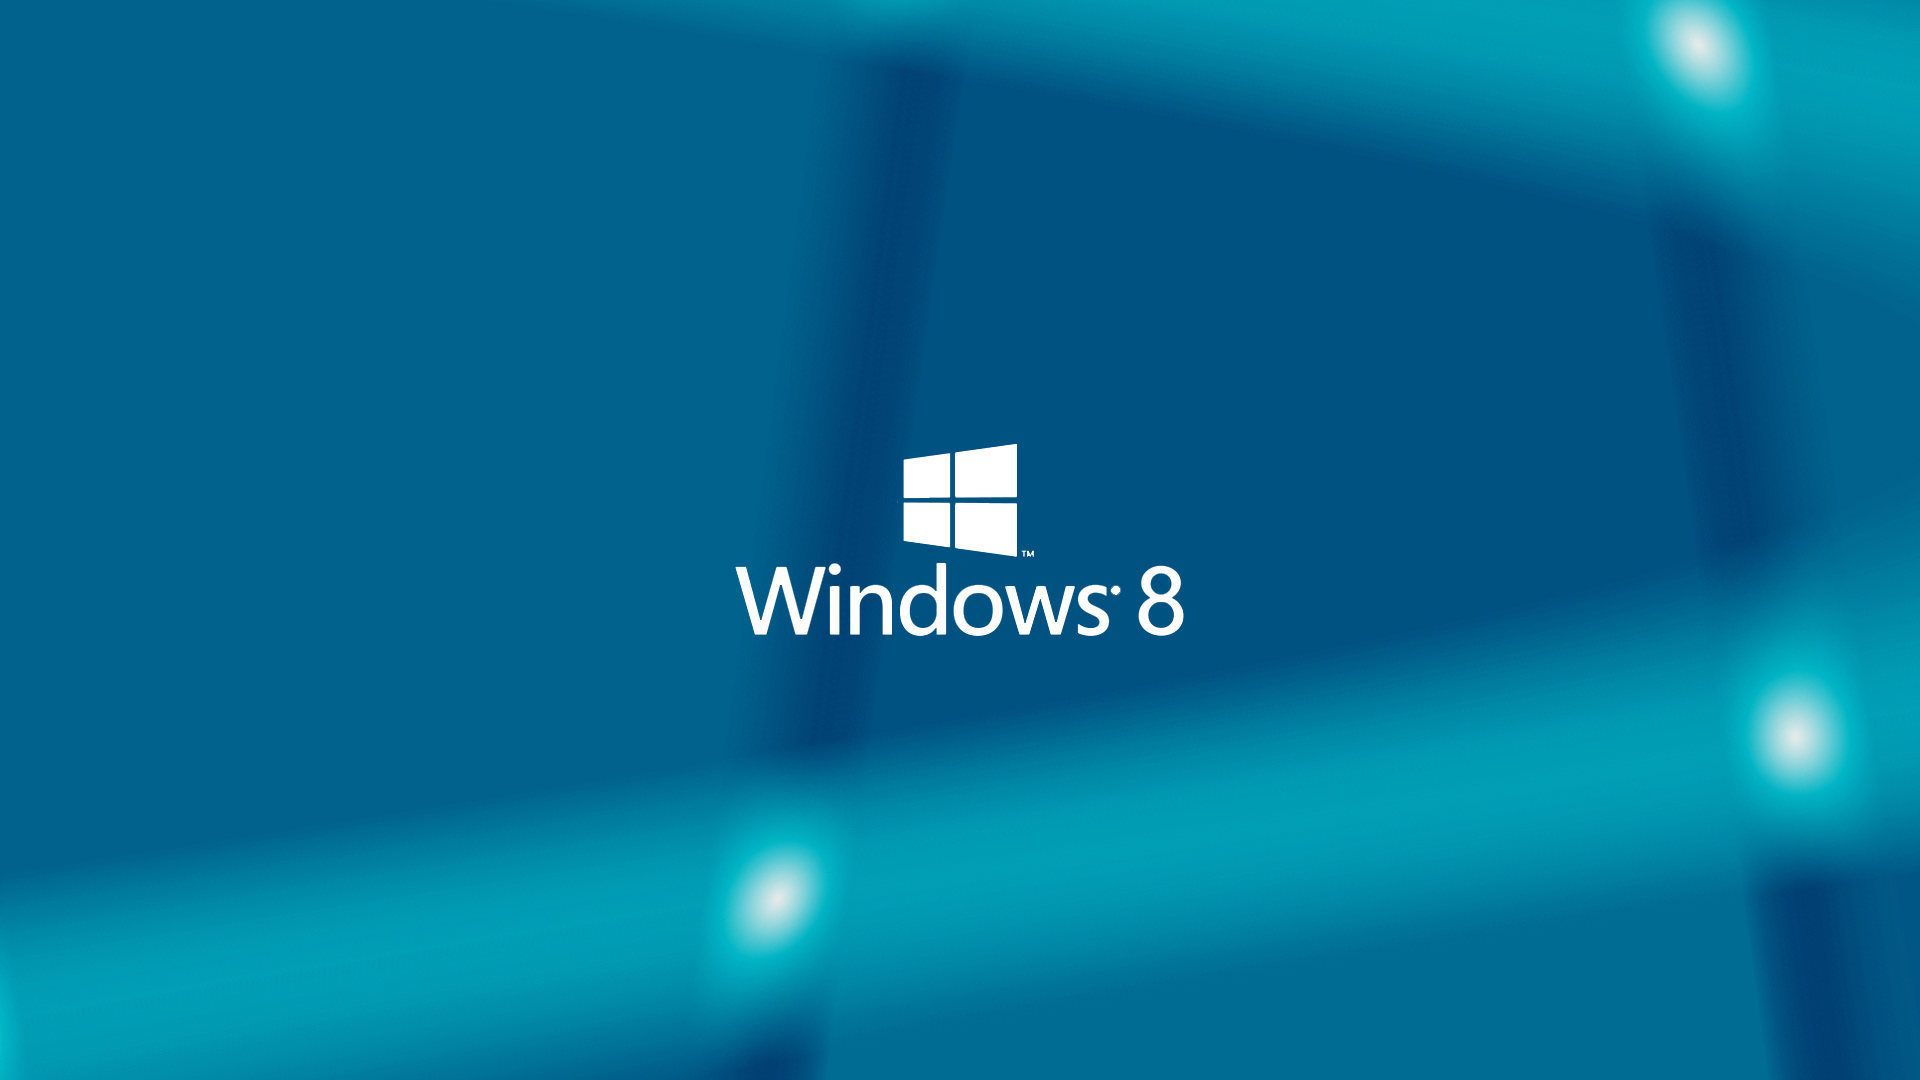 Free-Microsoft-Desktop-Backgrounds-1080p.jpg